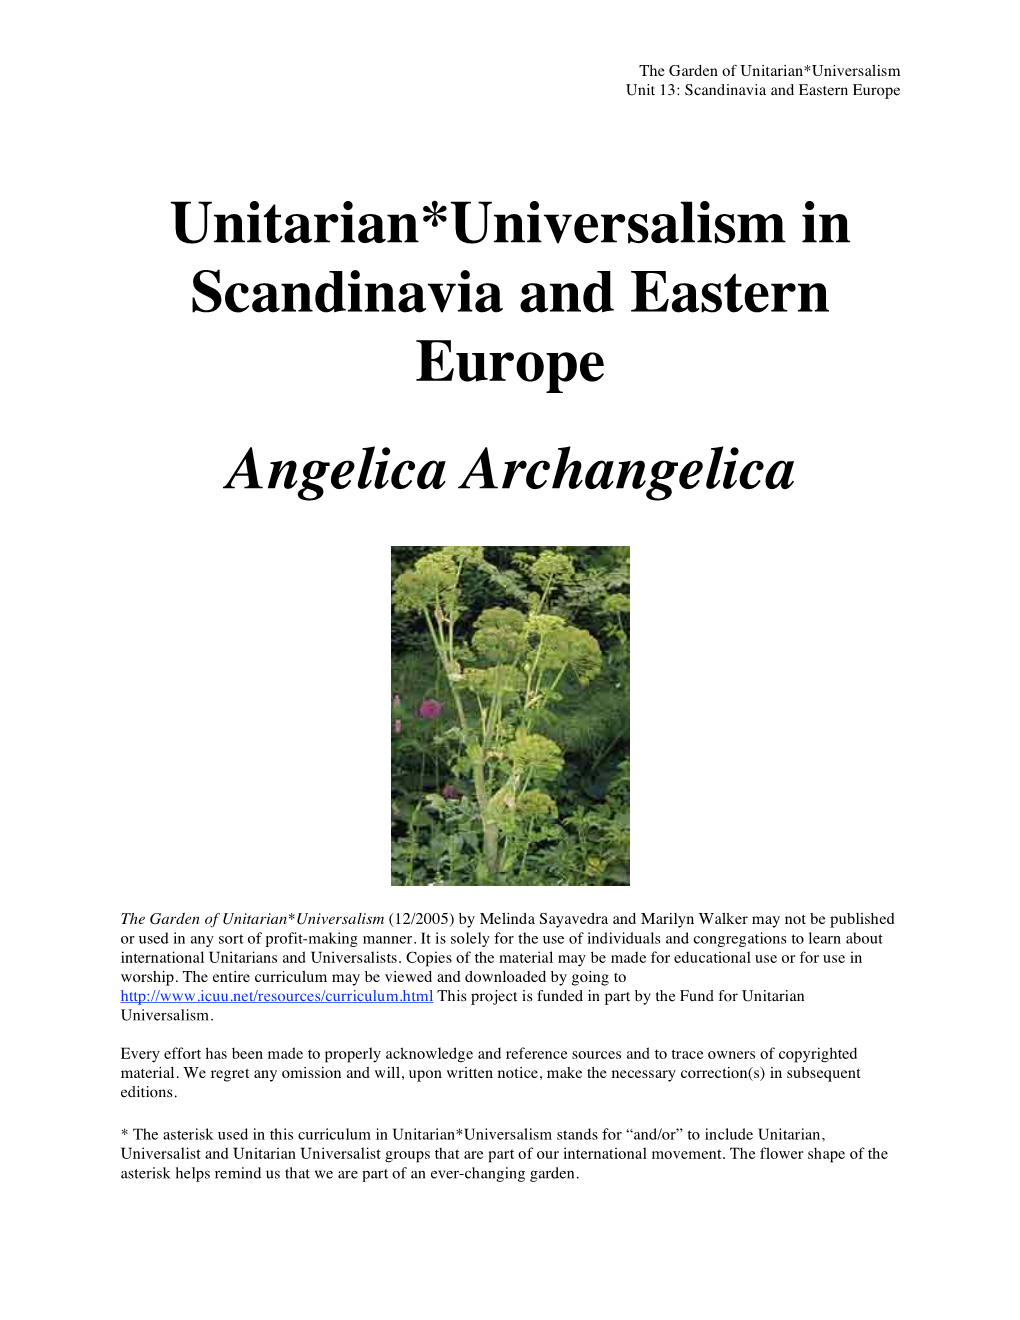 Unitarian*Universalism in Scandinavia and Eastern Europe